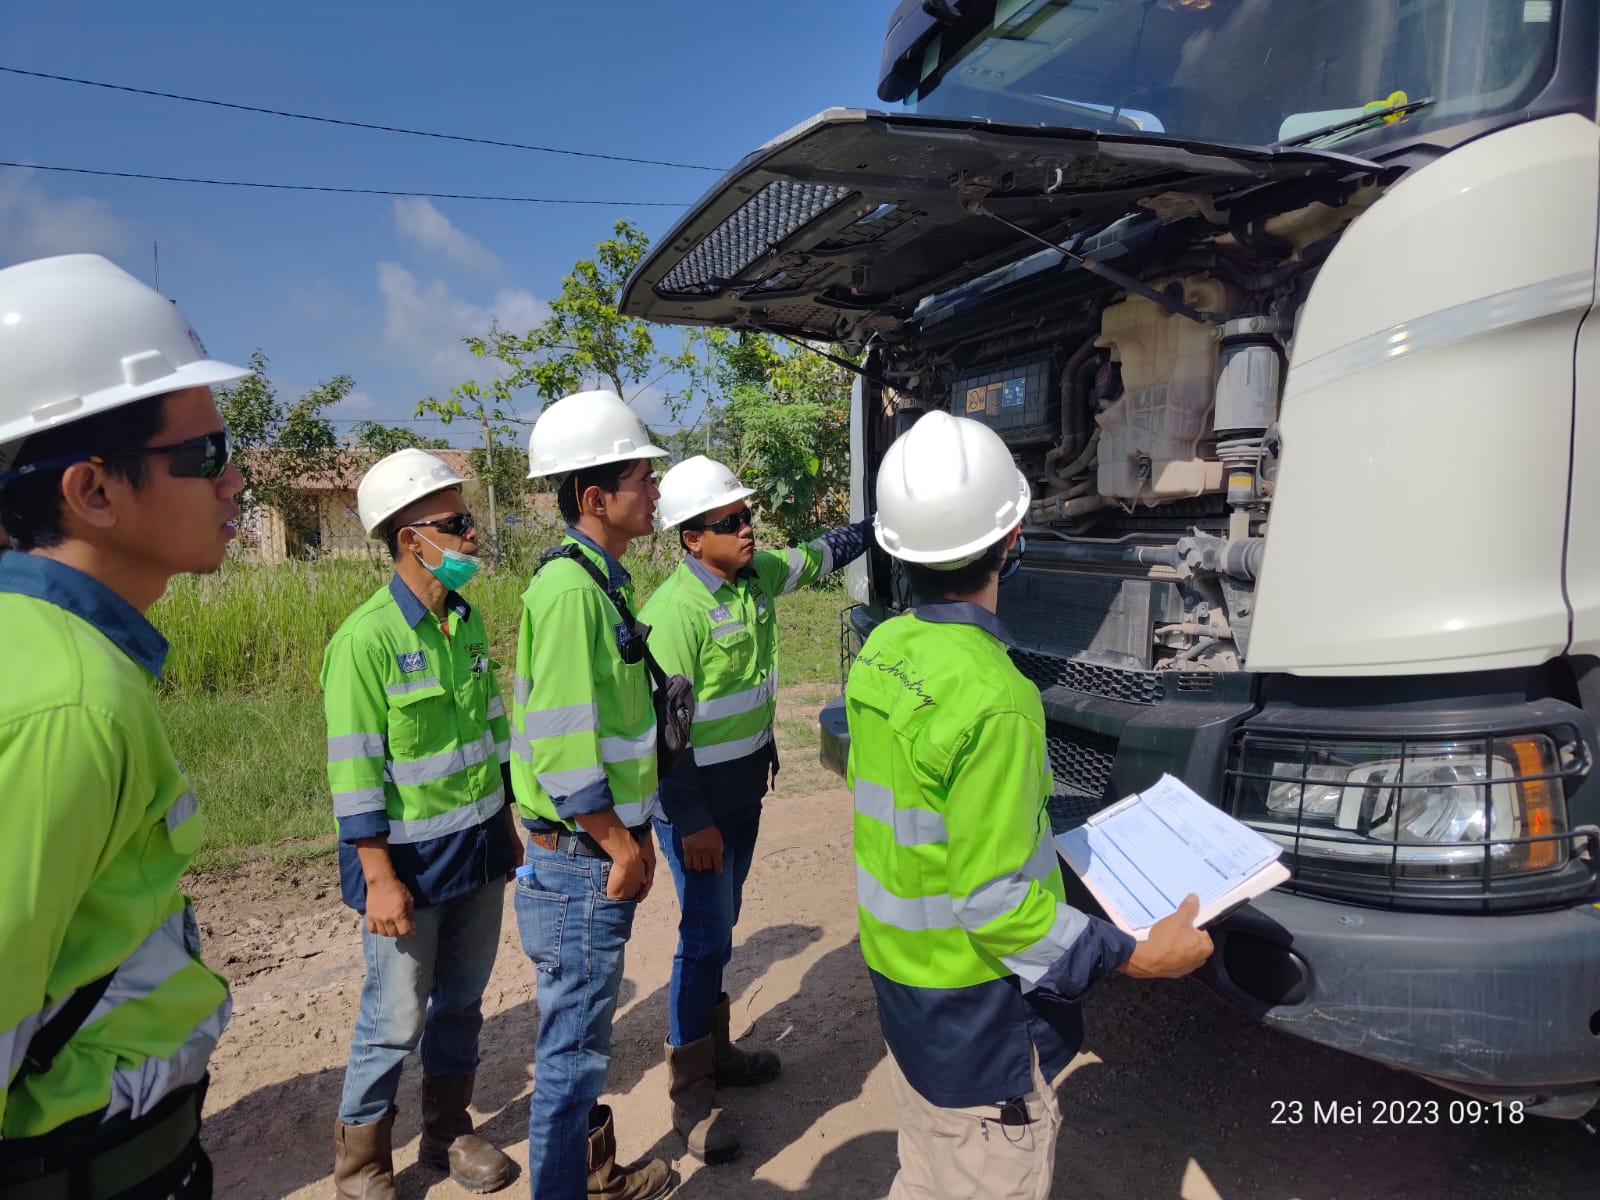 DDT-HV (Truck) AECI Kalimantan Timur, 15-25 Mei 2023